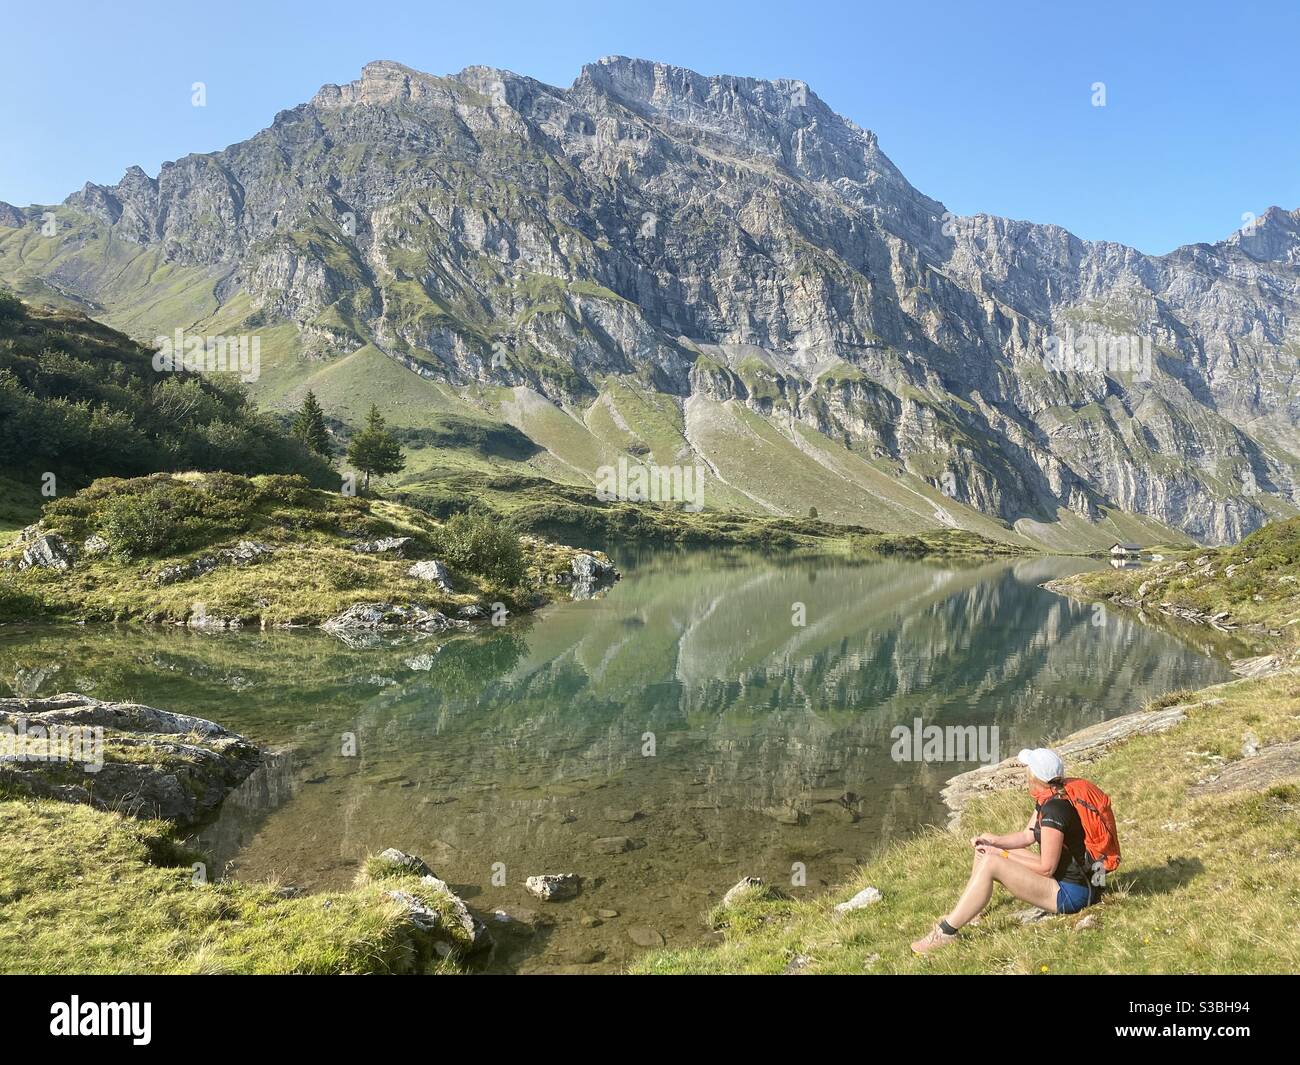 Hiking in Swiss alps Stock Photo